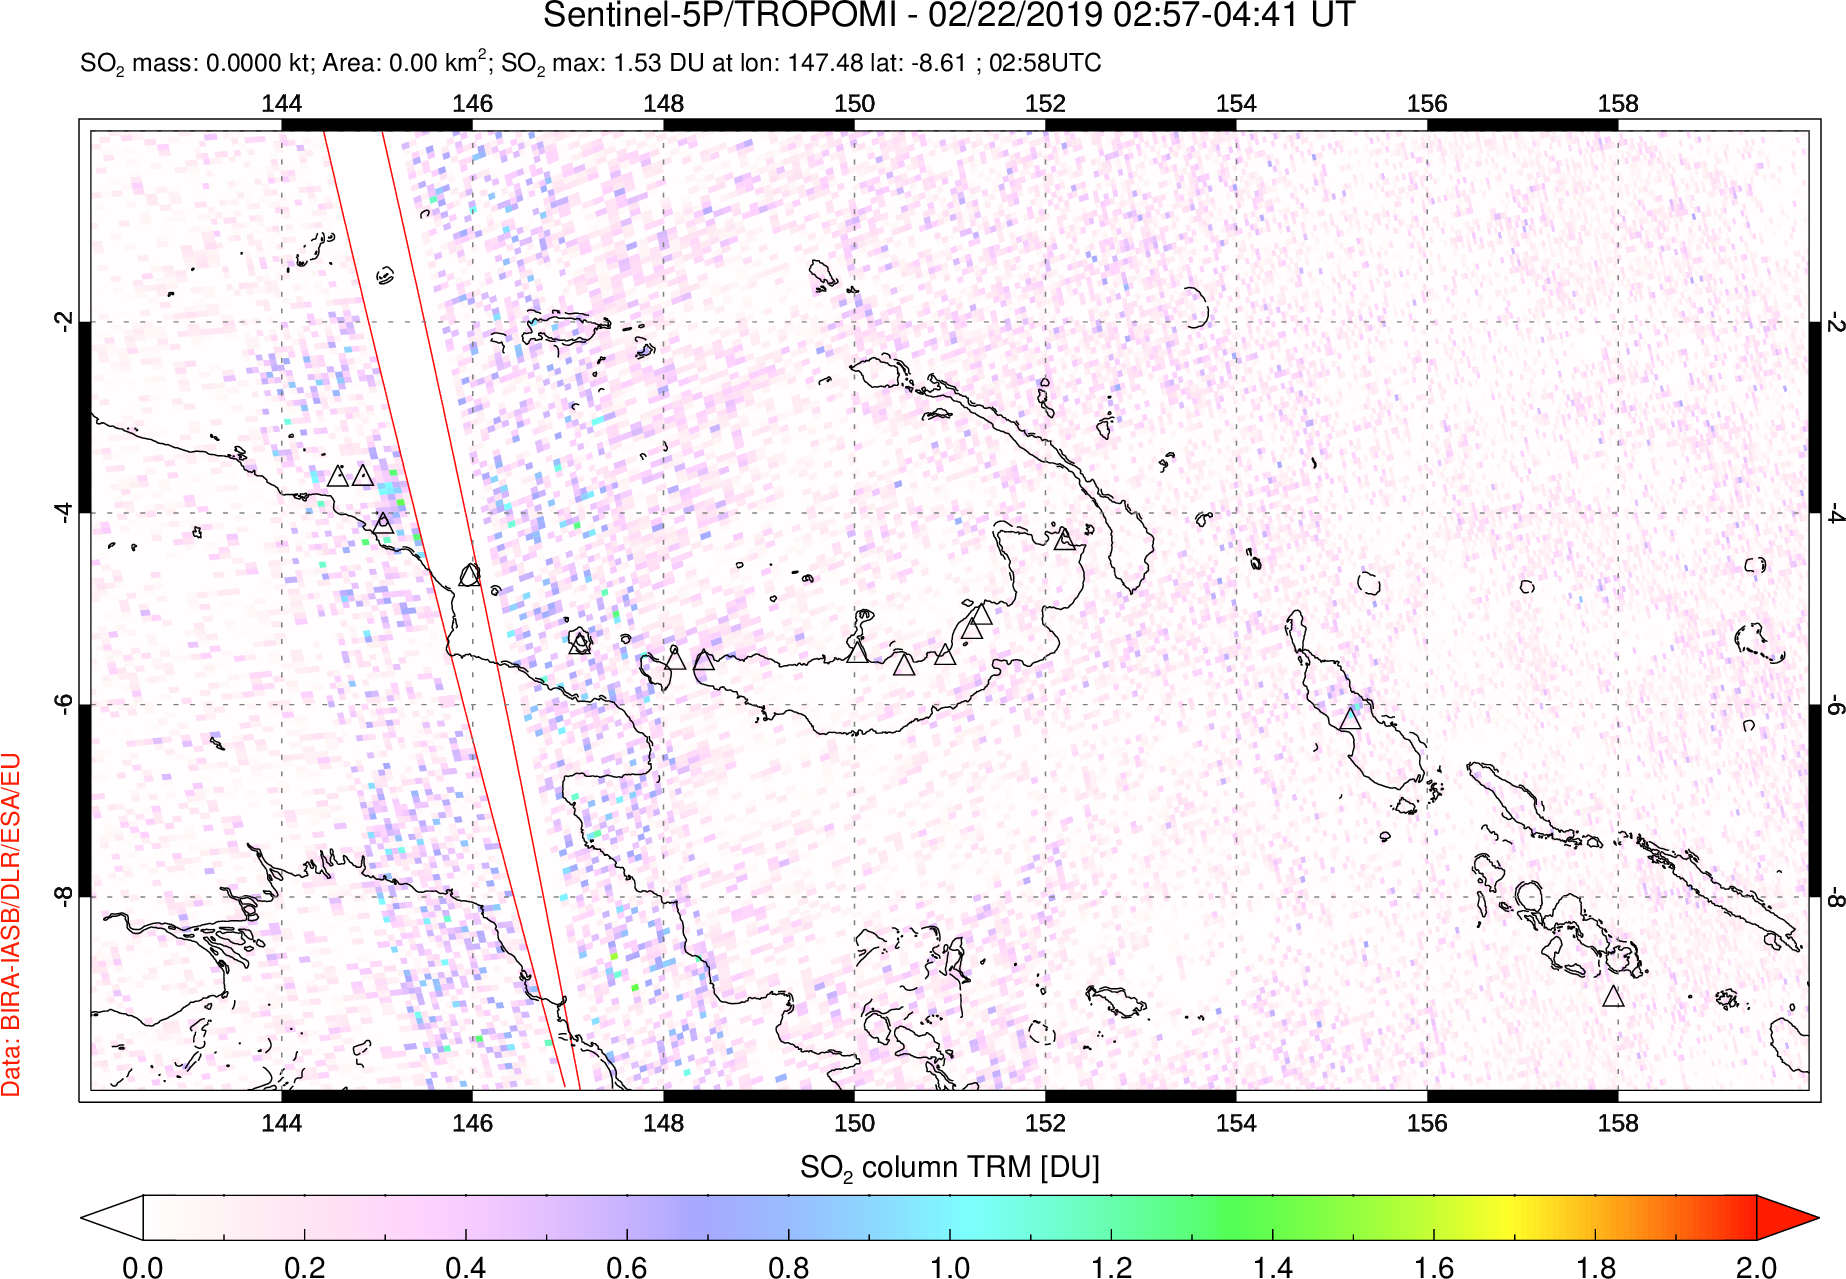 A sulfur dioxide image over Papua, New Guinea on Feb 22, 2019.